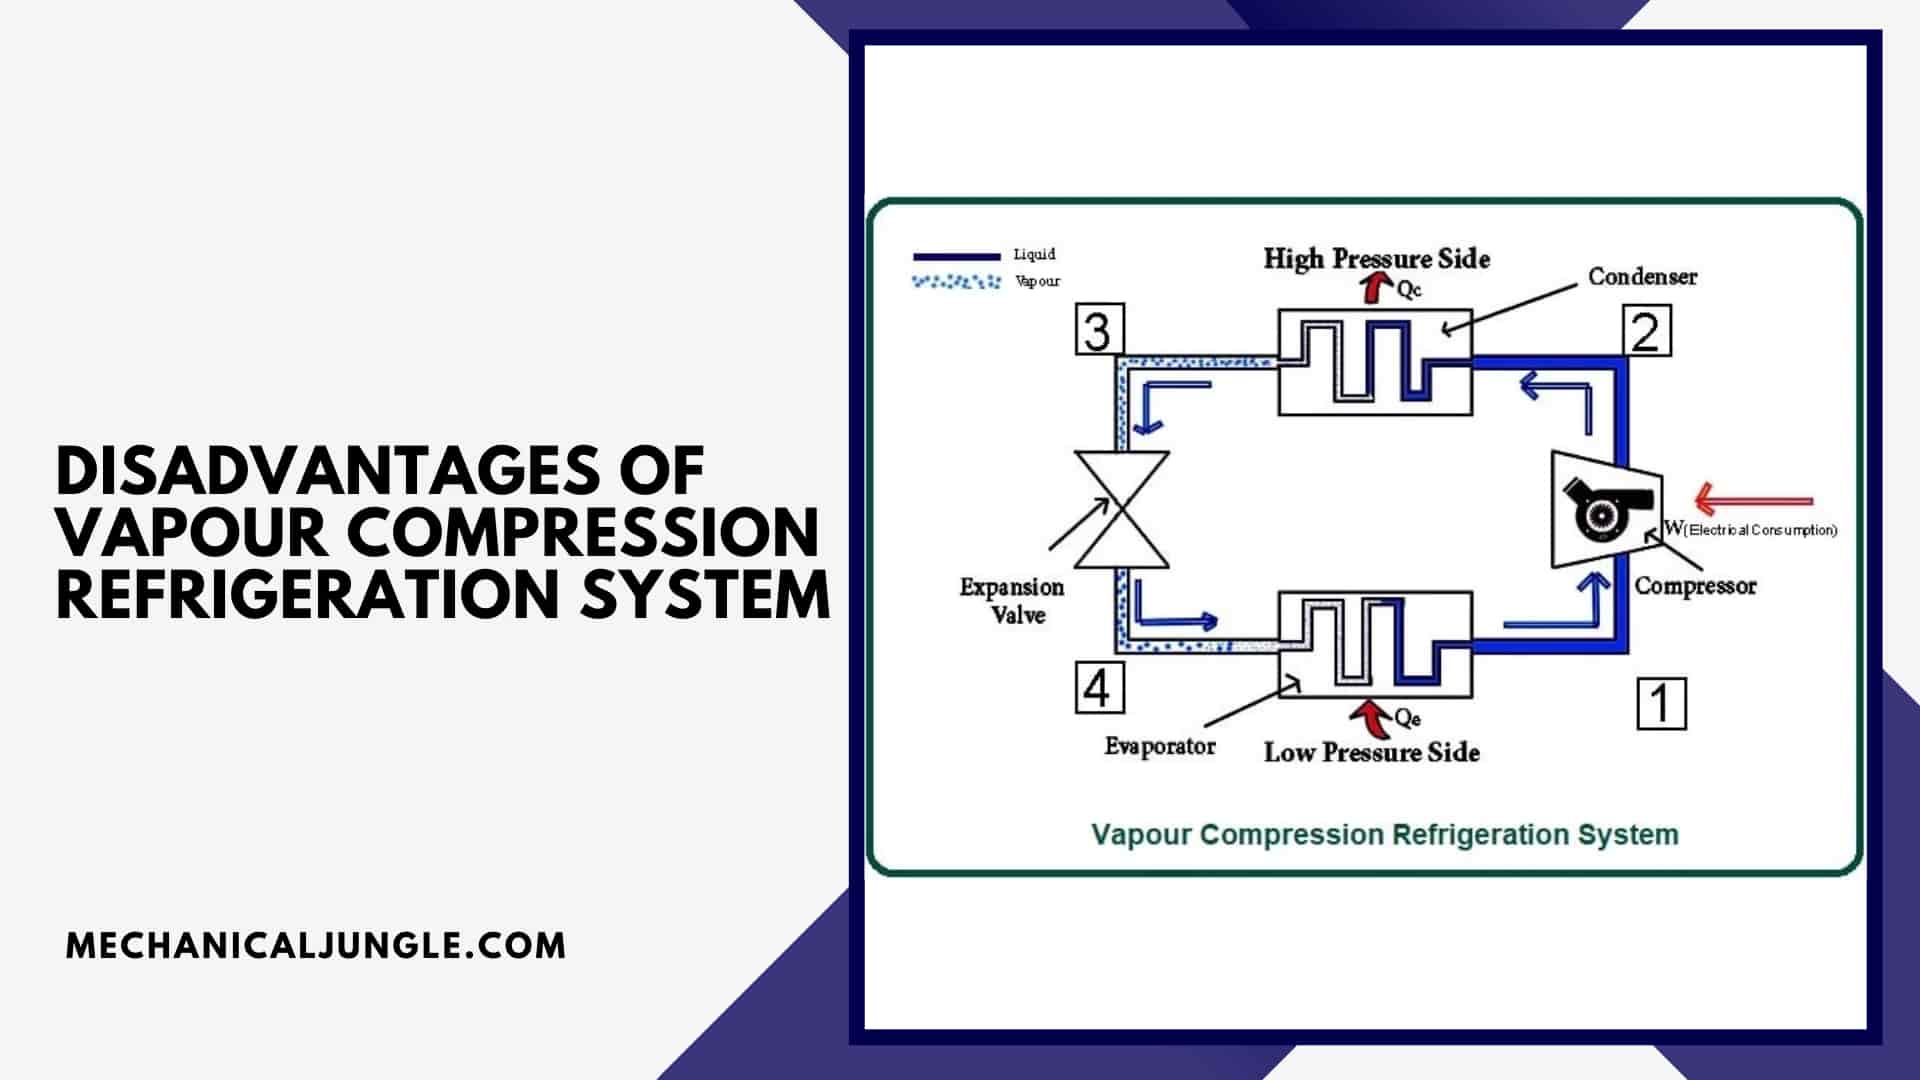 Disadvantages of Vapour Compression Refrigeration System